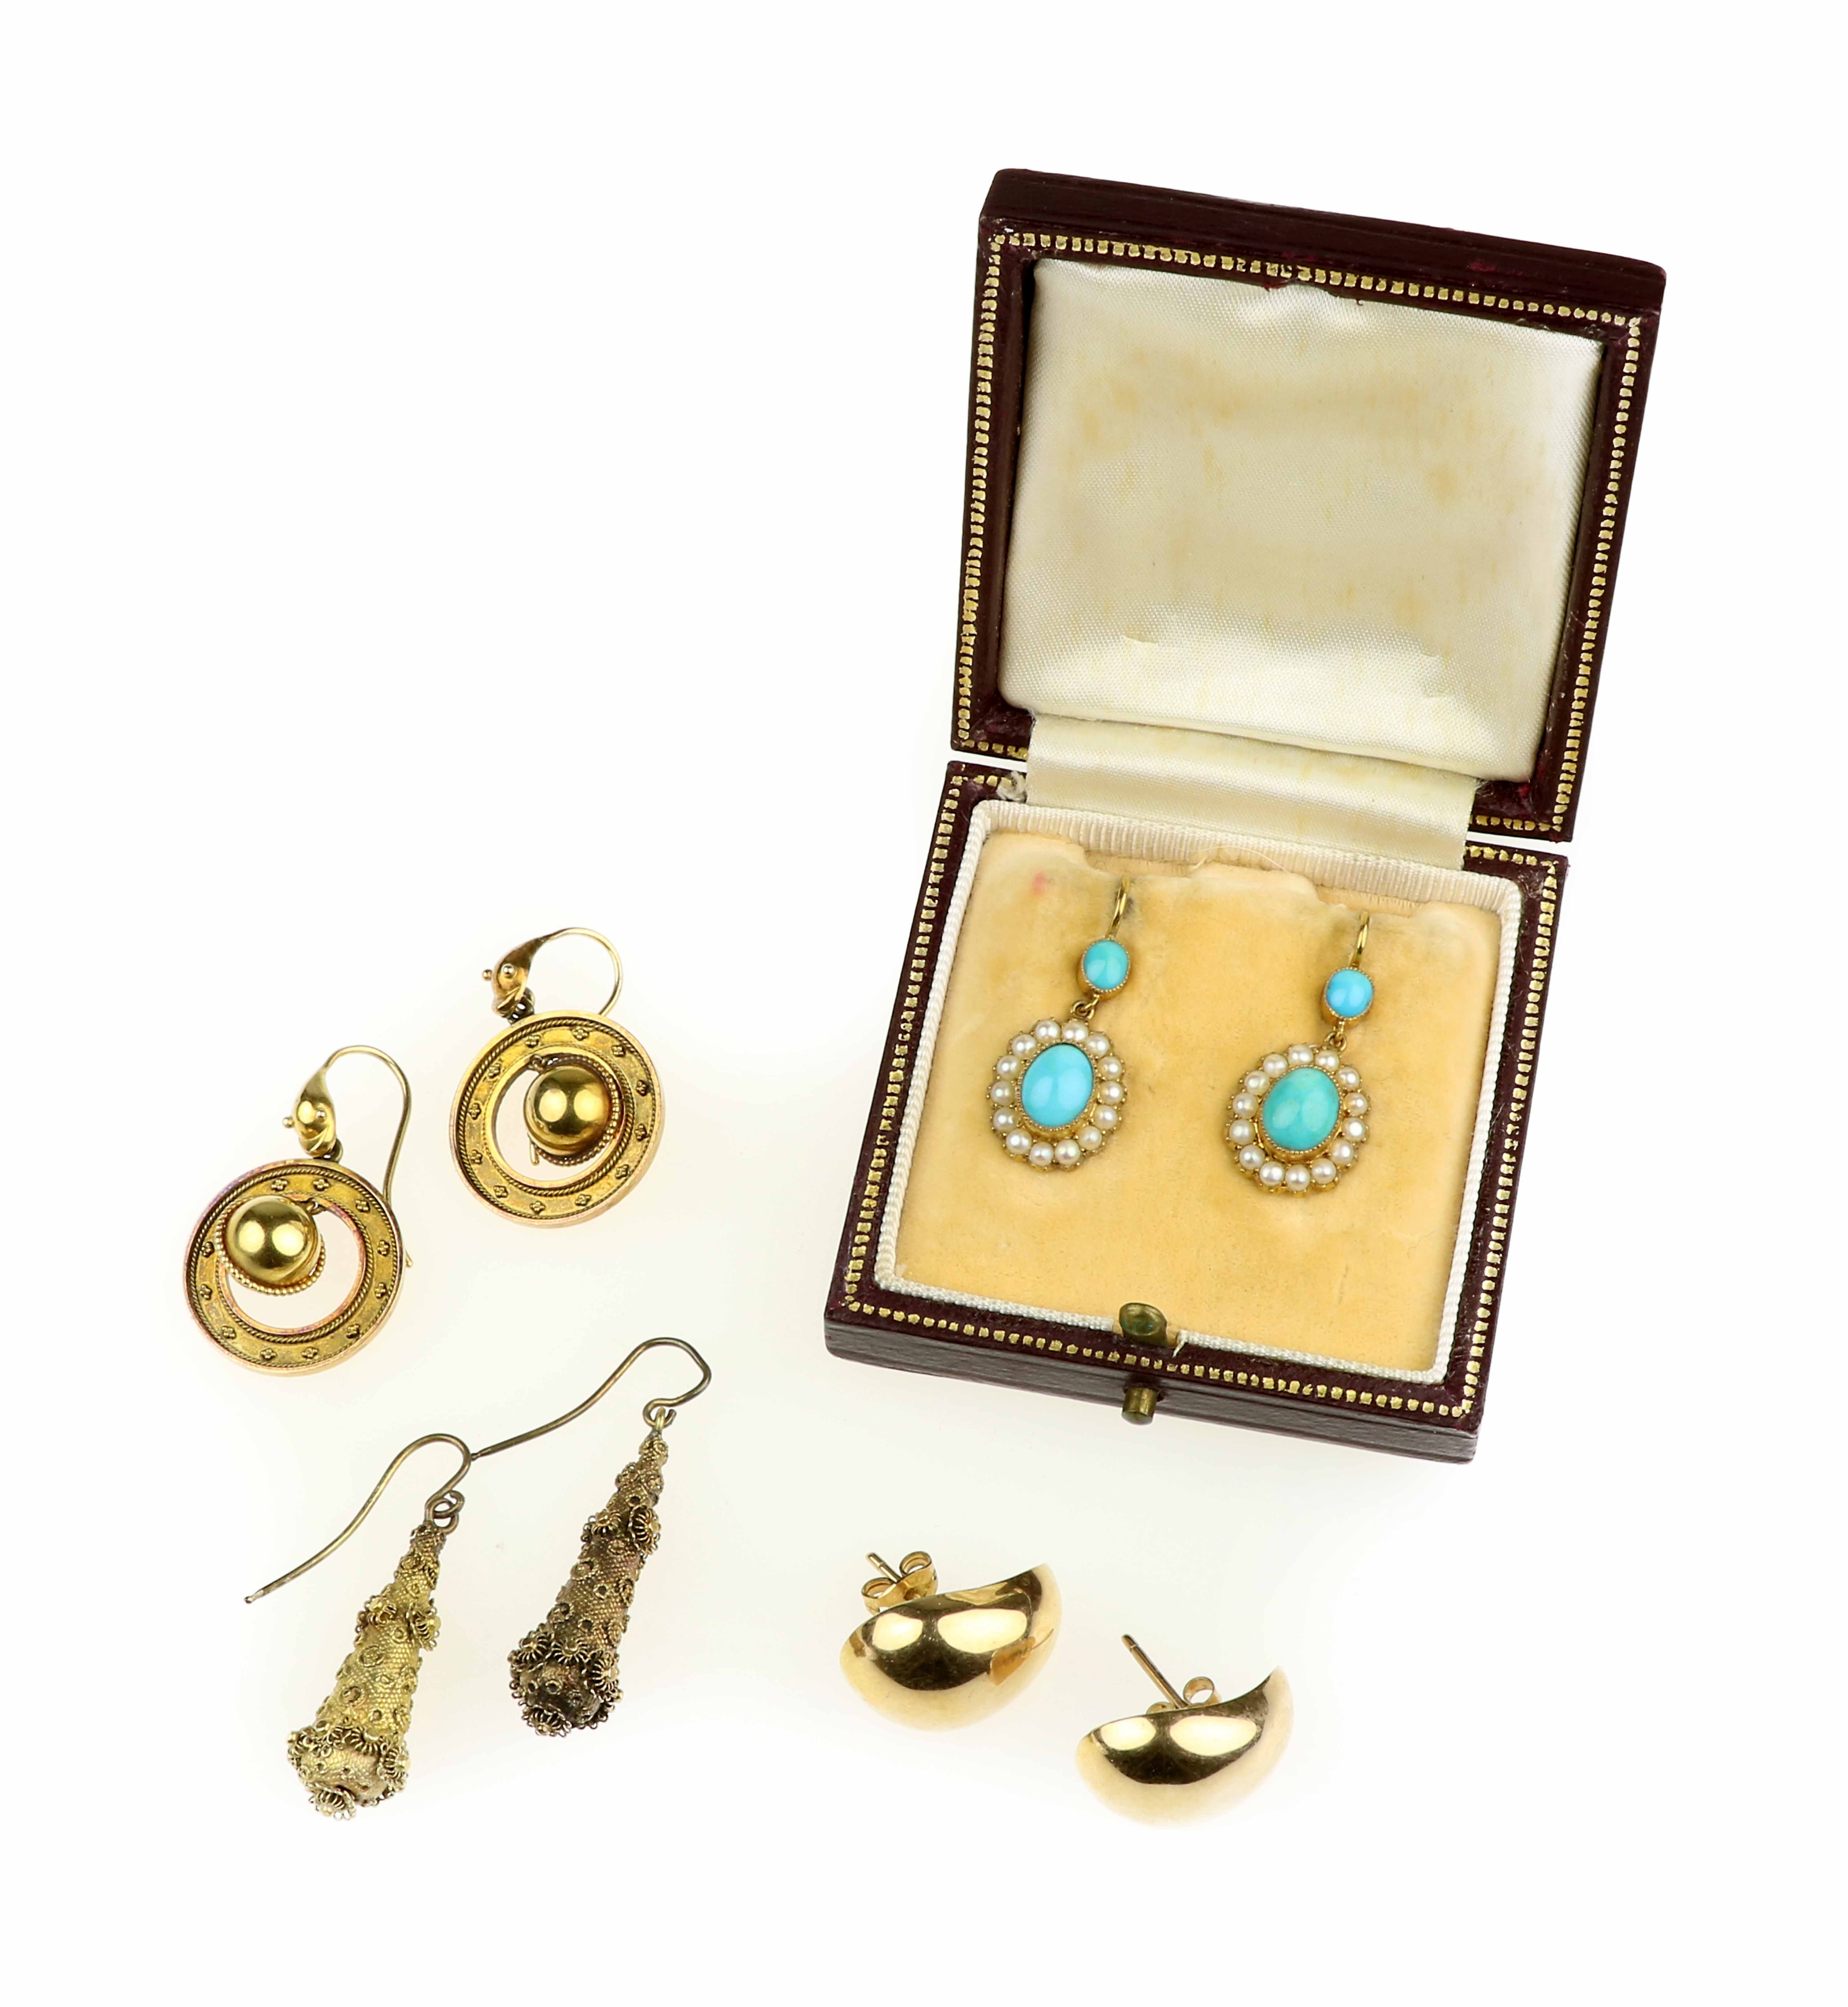 Four pairs of earrings